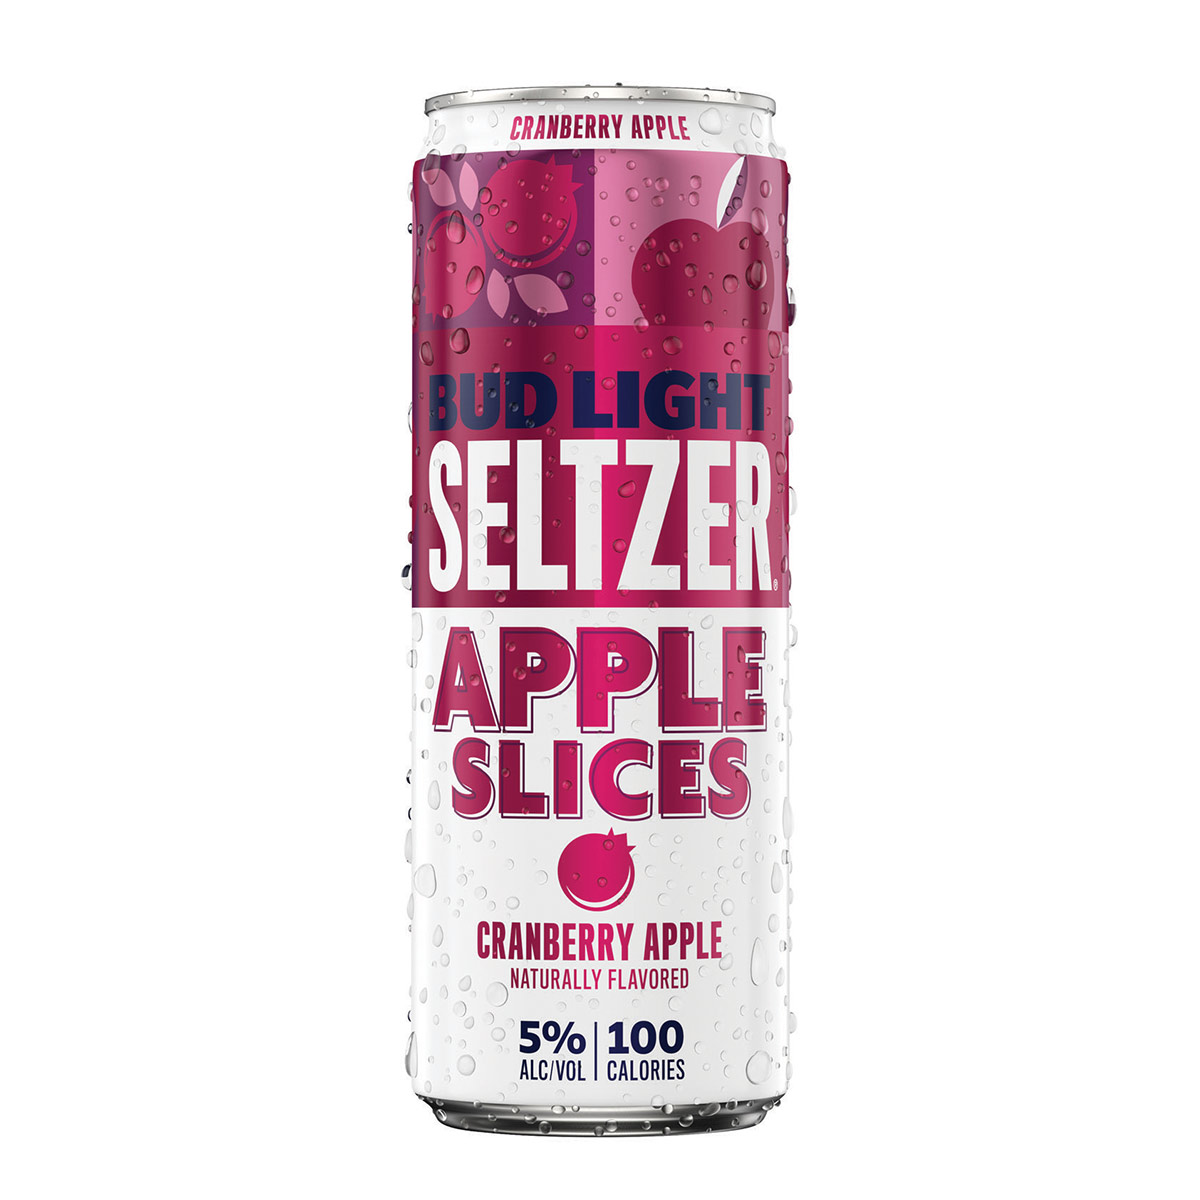 Bud Light Seltzer Apple Slices Cranberry Apple